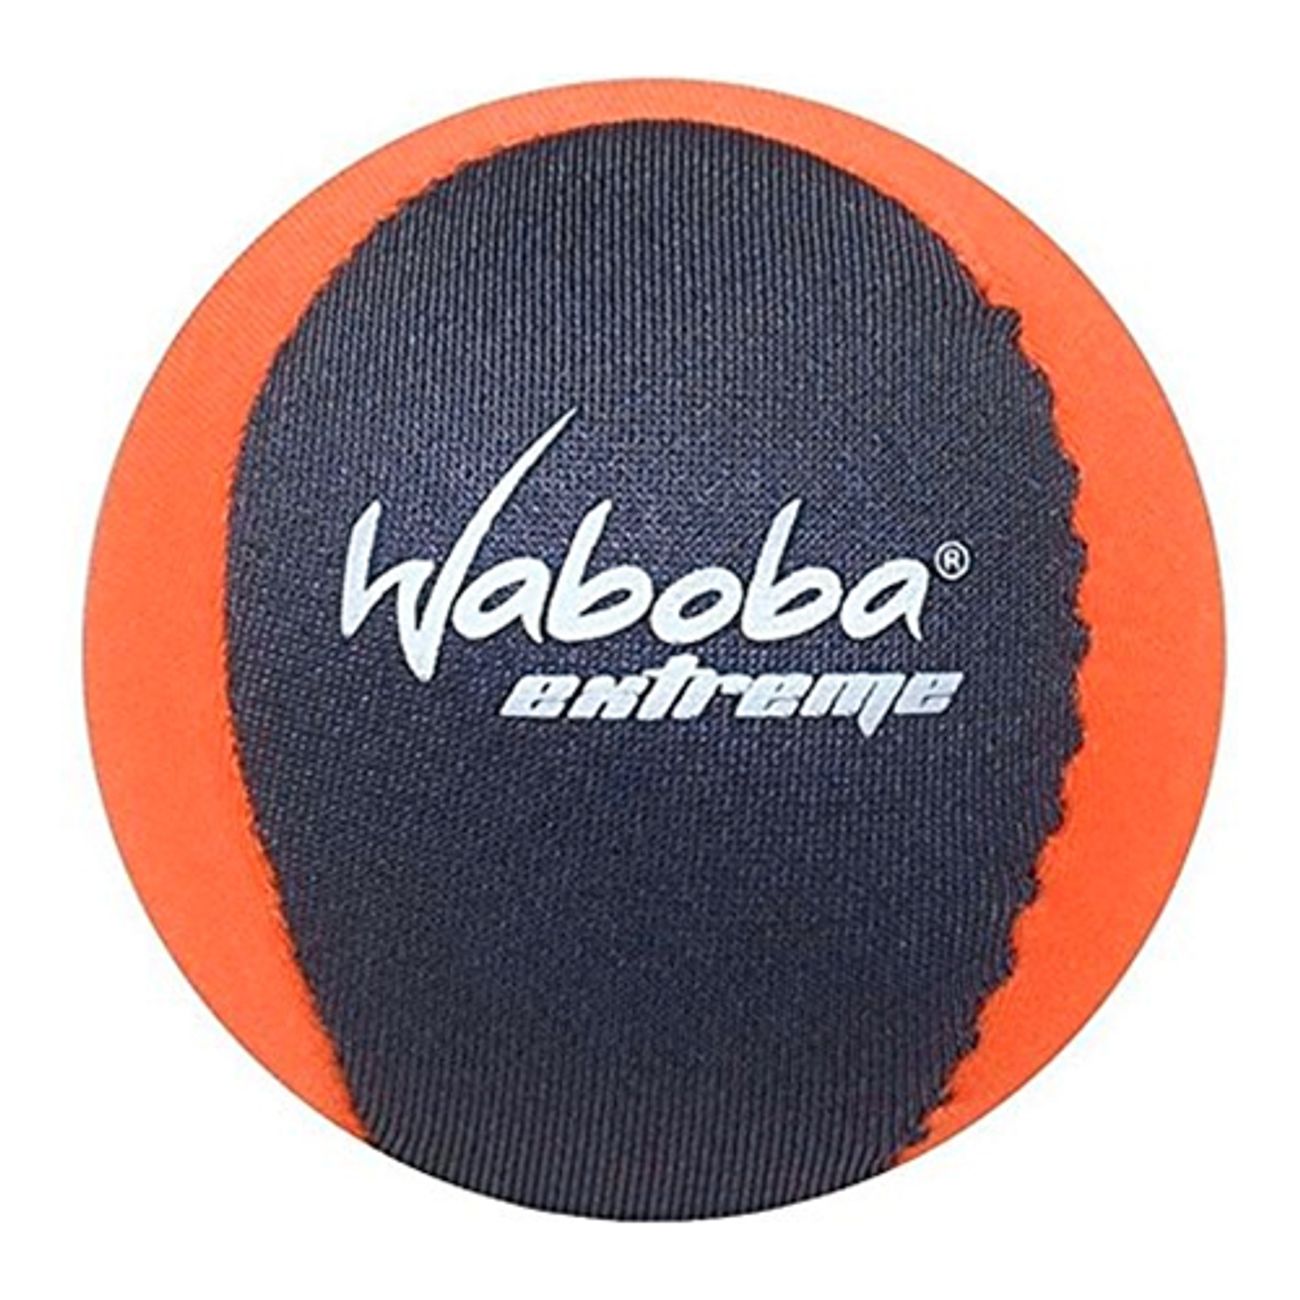 waboba-extreme-strandboll-3